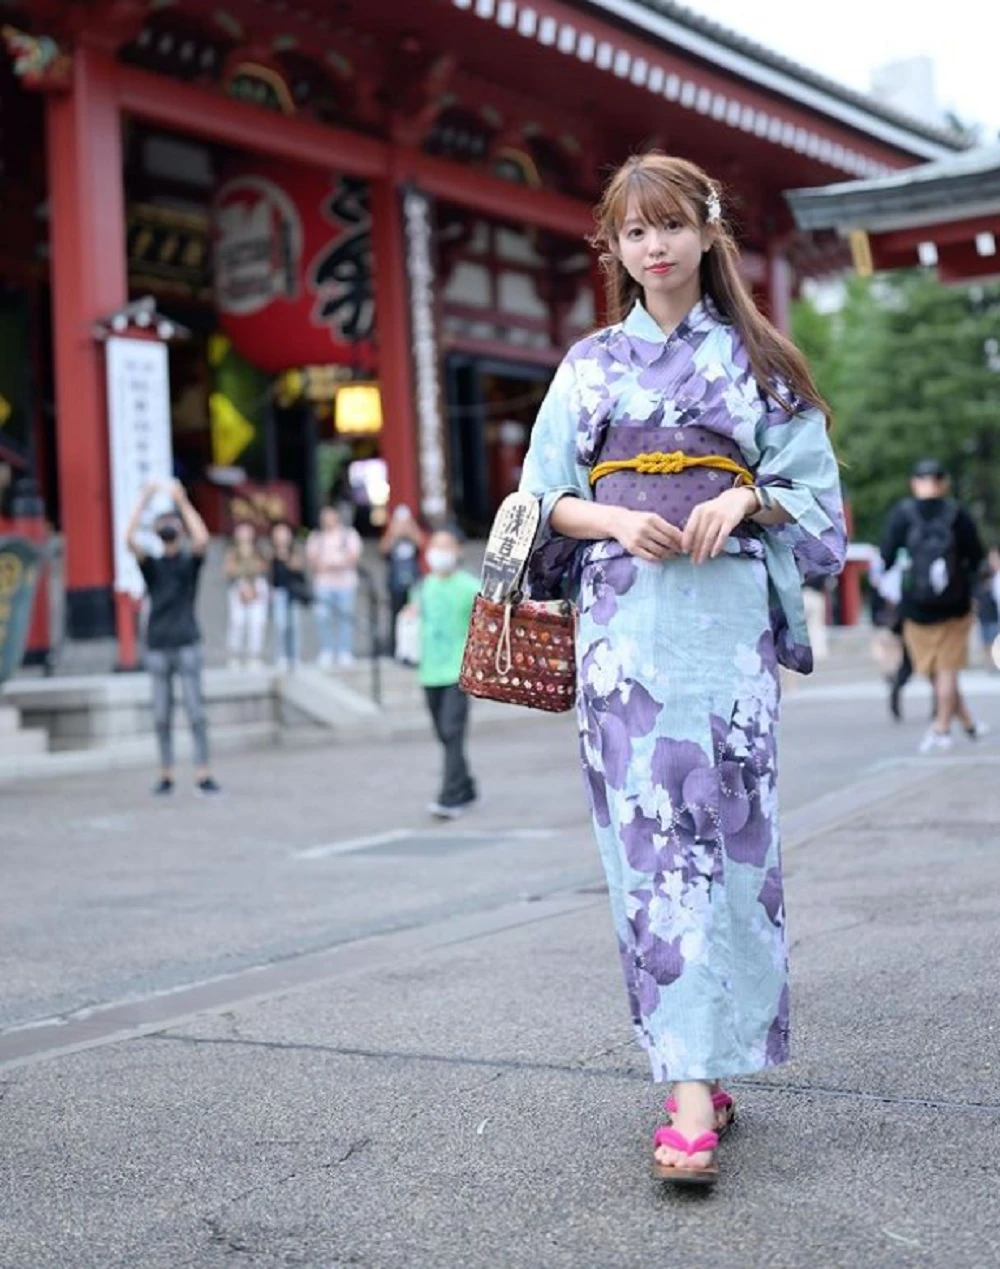 A woman wearing a traditional yukata in Japan-pelago